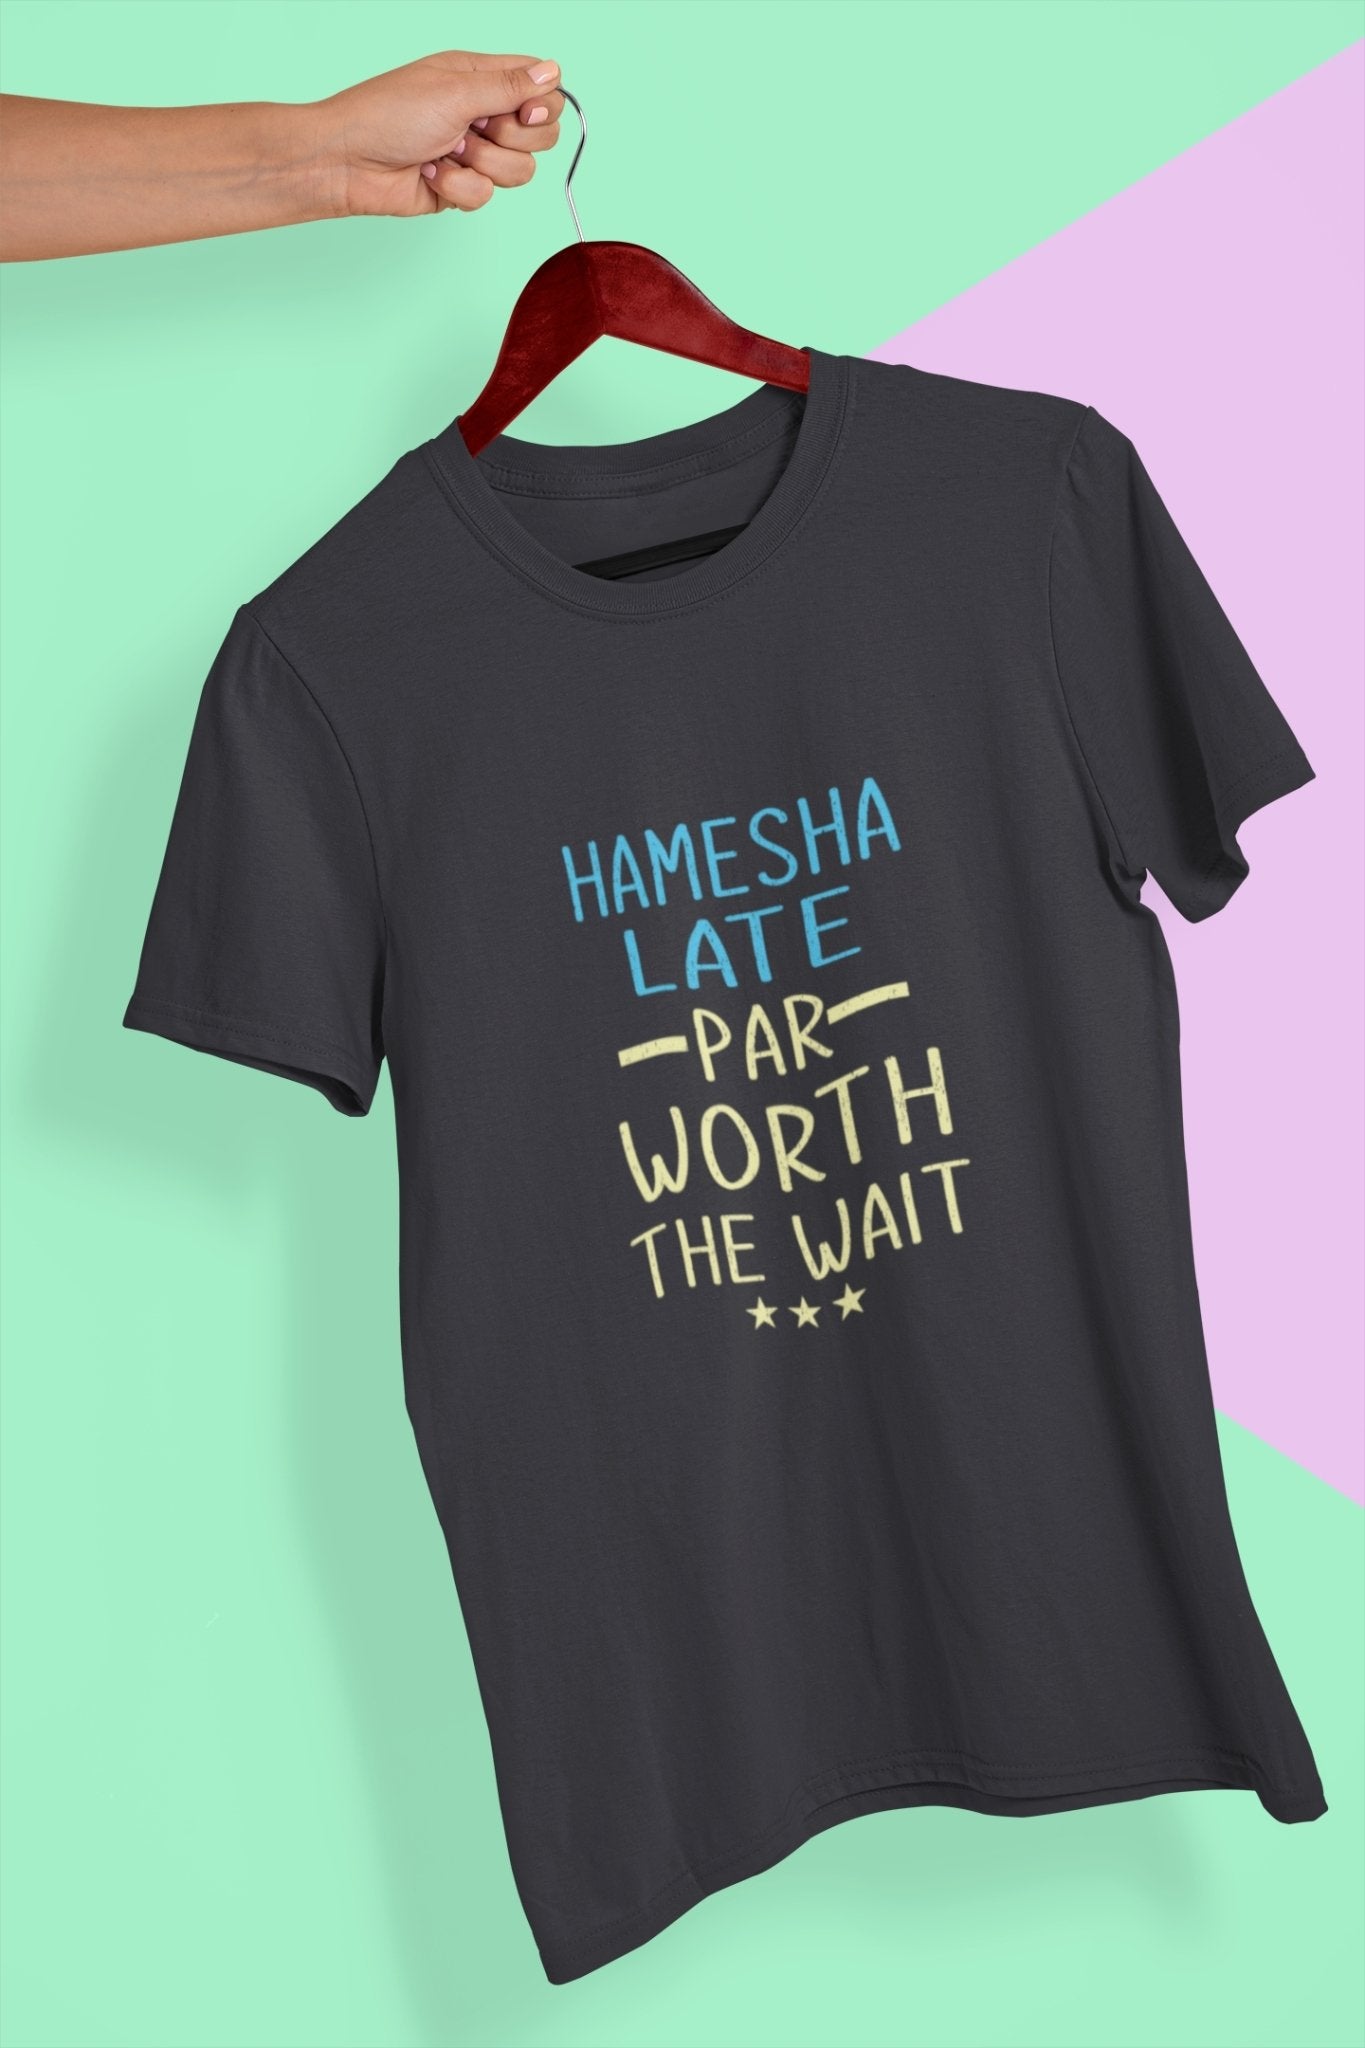 Hamesha Late Par Worth The Wait Typography Mens Half Sleeves T-shirt- FunkyTeesClub - Funky Tees Club